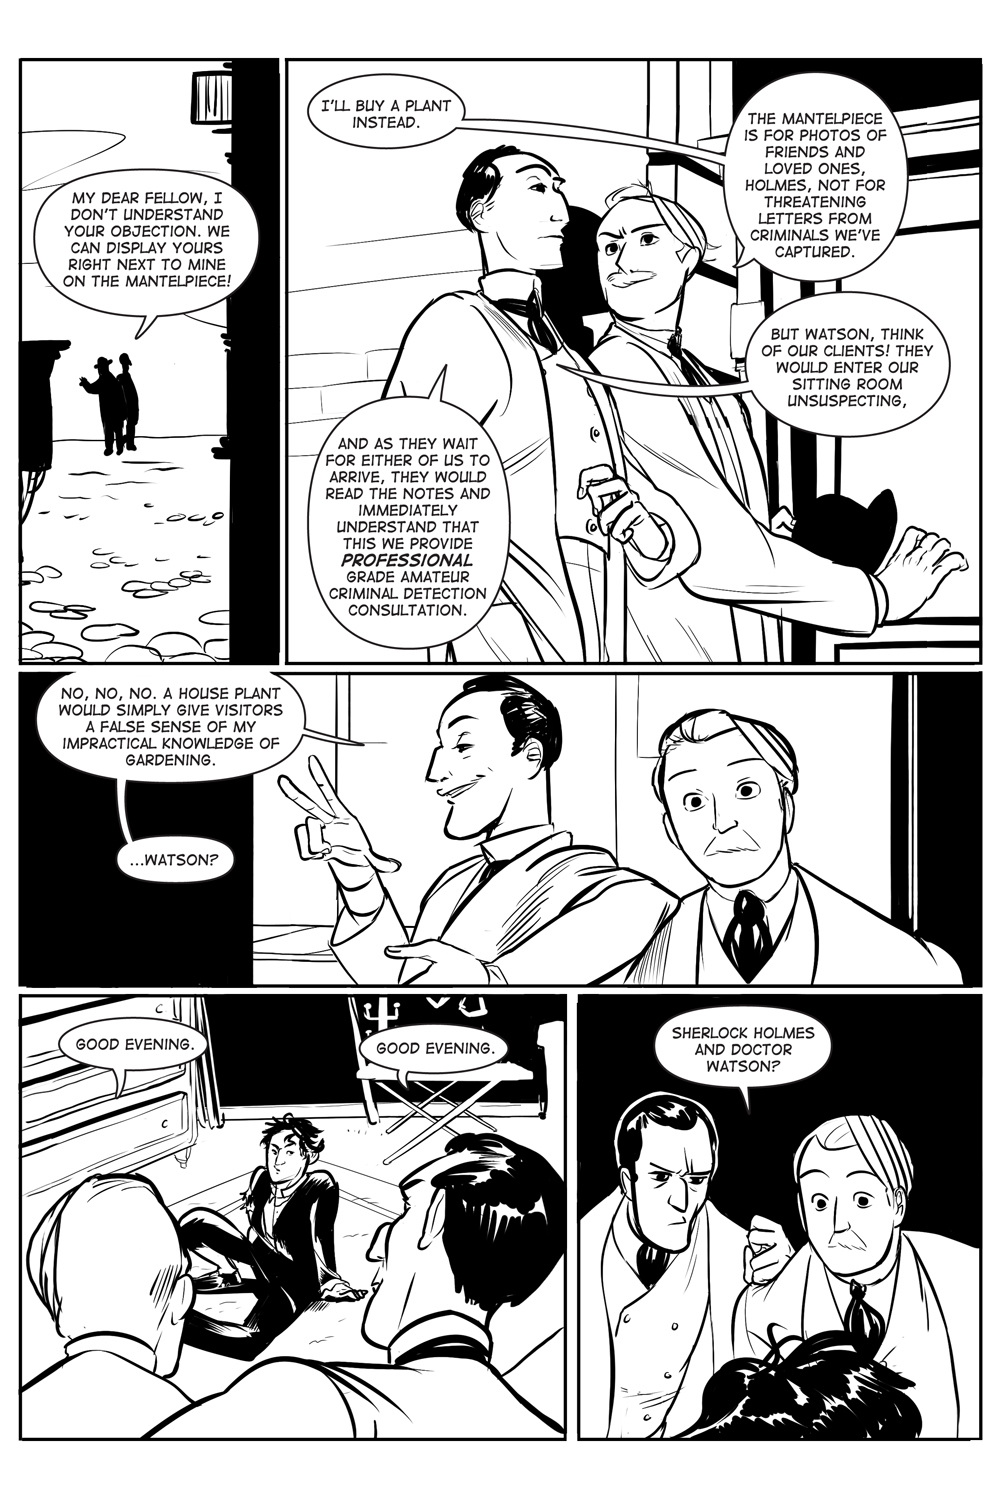 houdini Sherlock Holmes watson holmes mystery detective comic